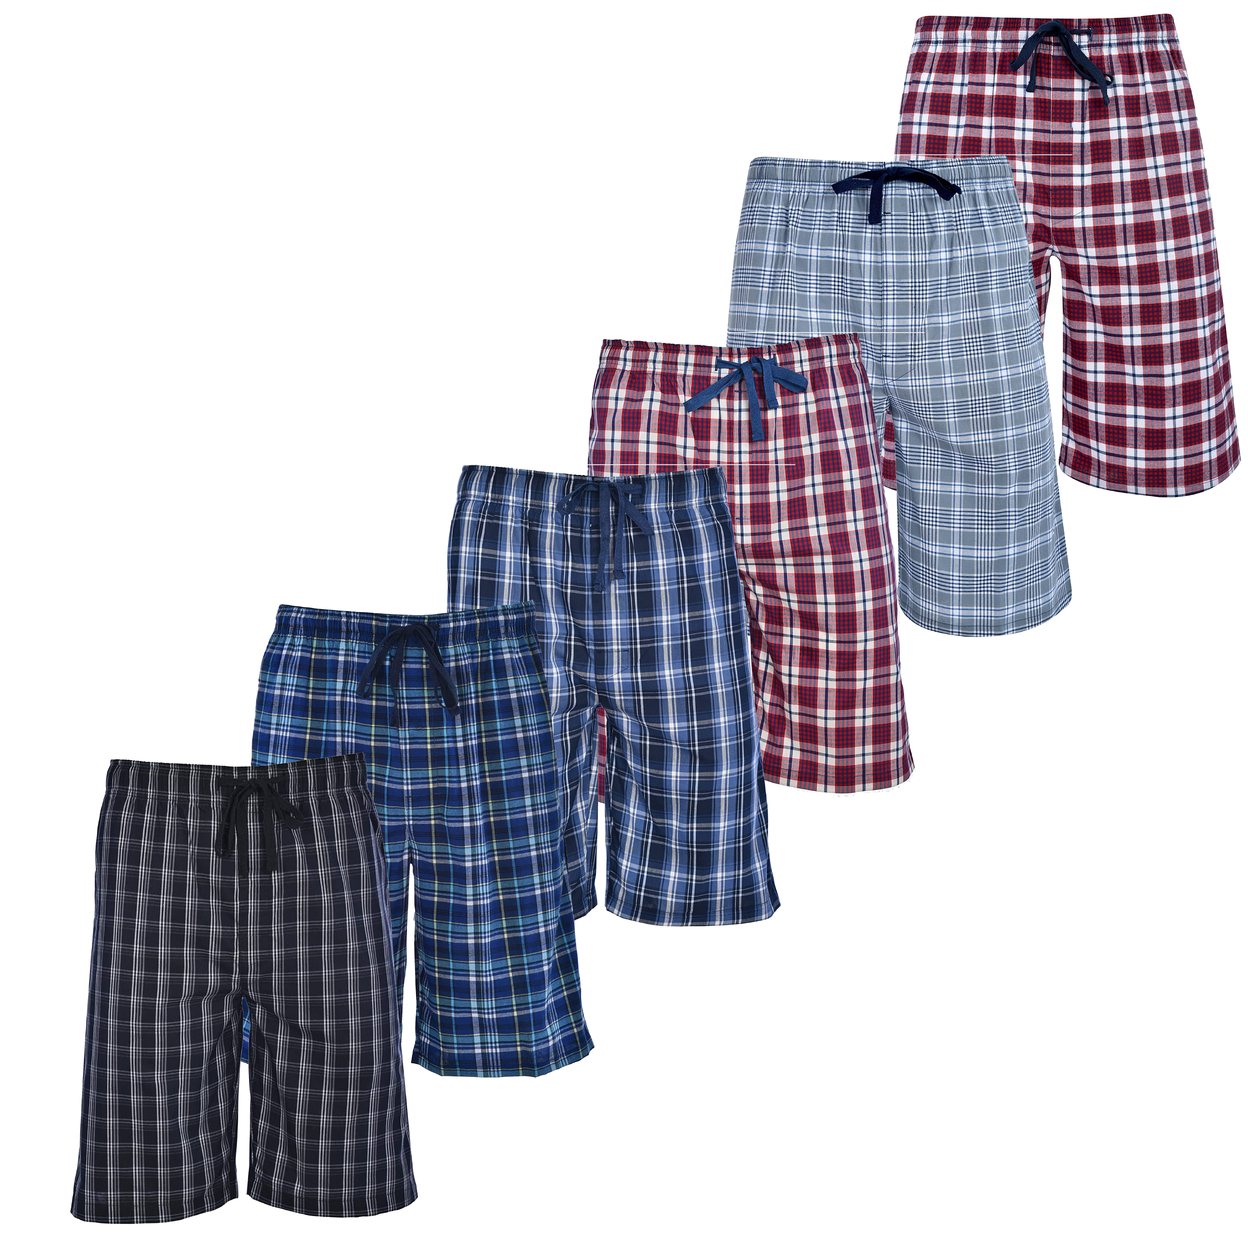 Multi-Pack: Men's Ultra Soft Plaid Lounge Pajama Sleep Wear Shorts - 3-pack, Large